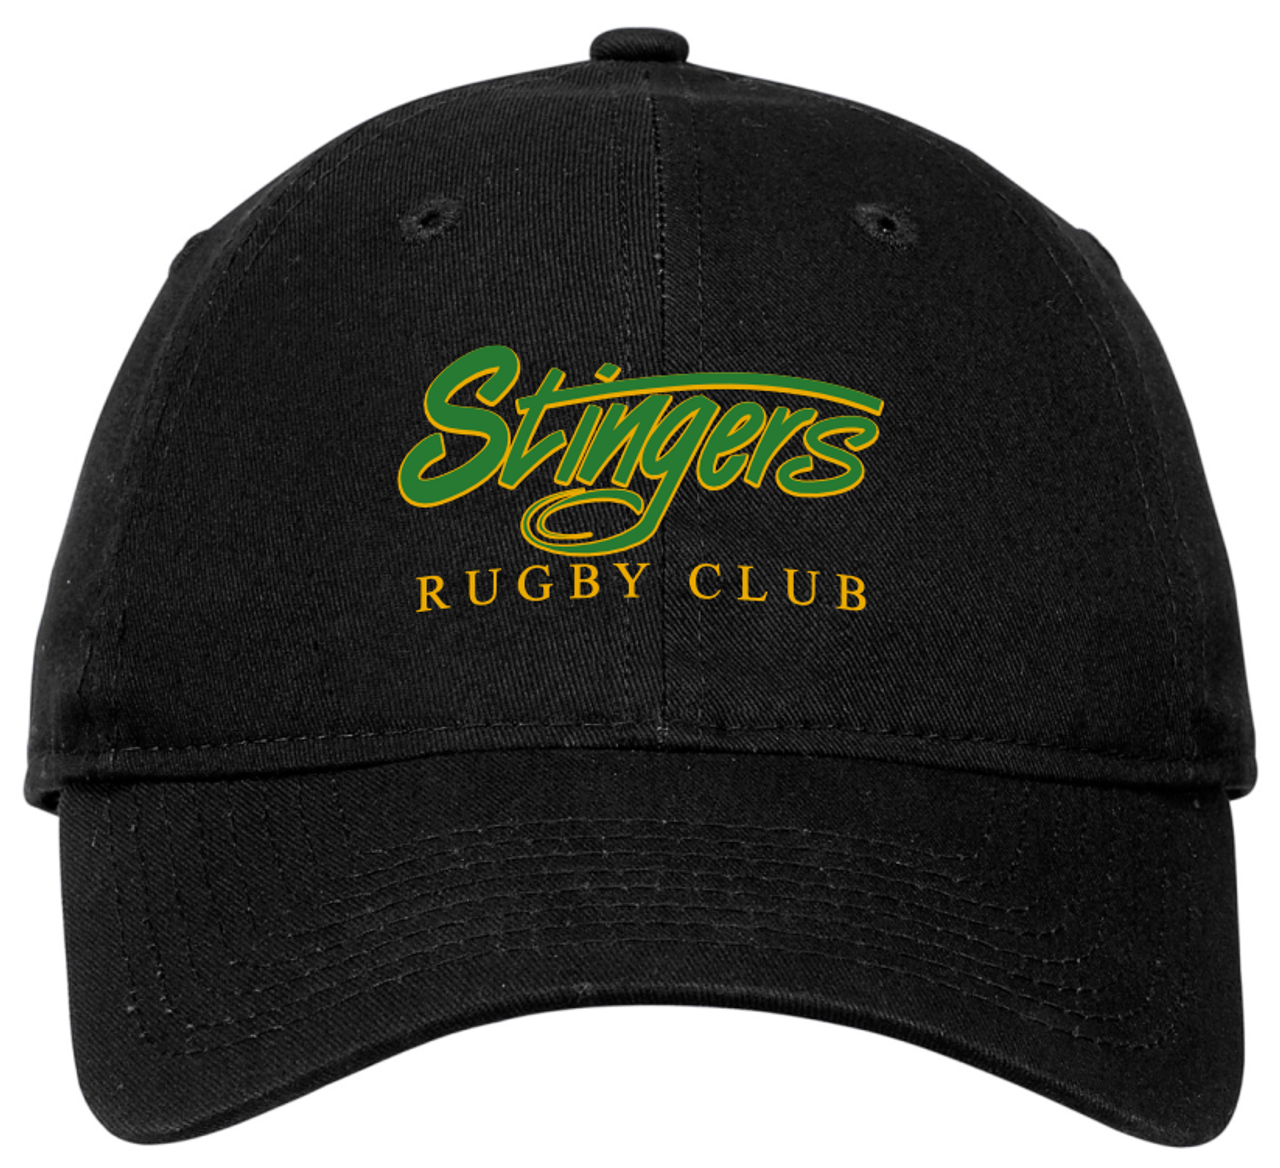 Stingers Rugby Club Adjustable Hat